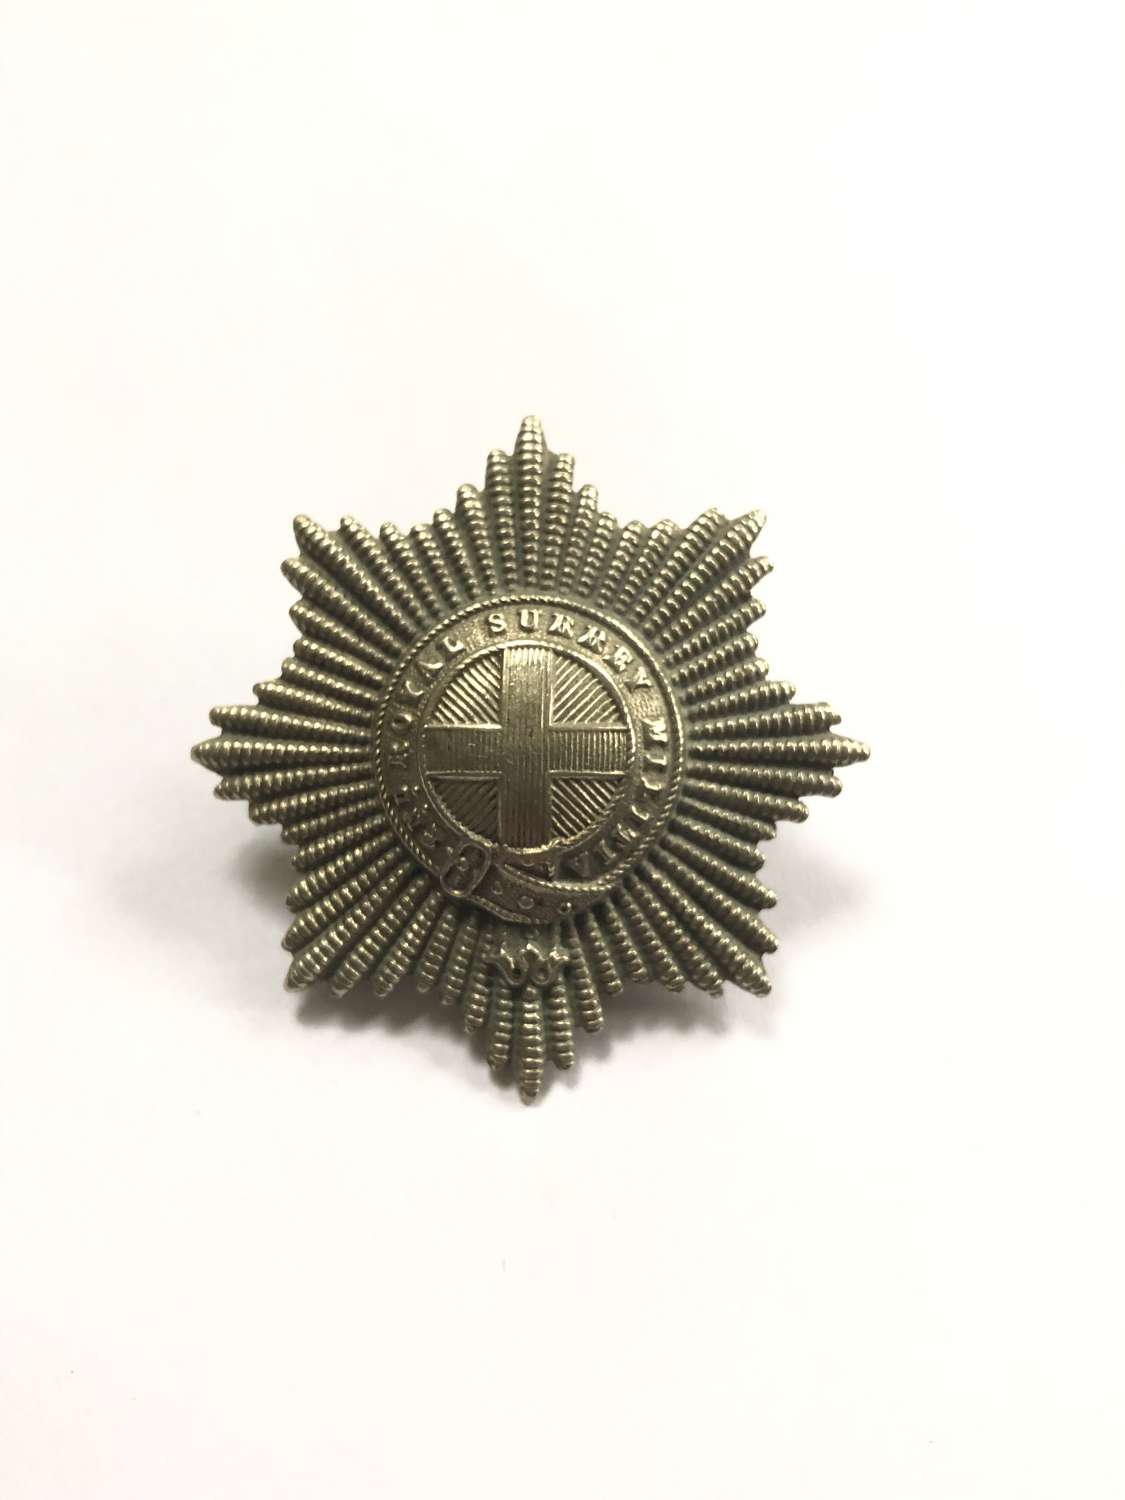 2nd Royal Surrey Militia Victorian glengarry badge circa 1874-81